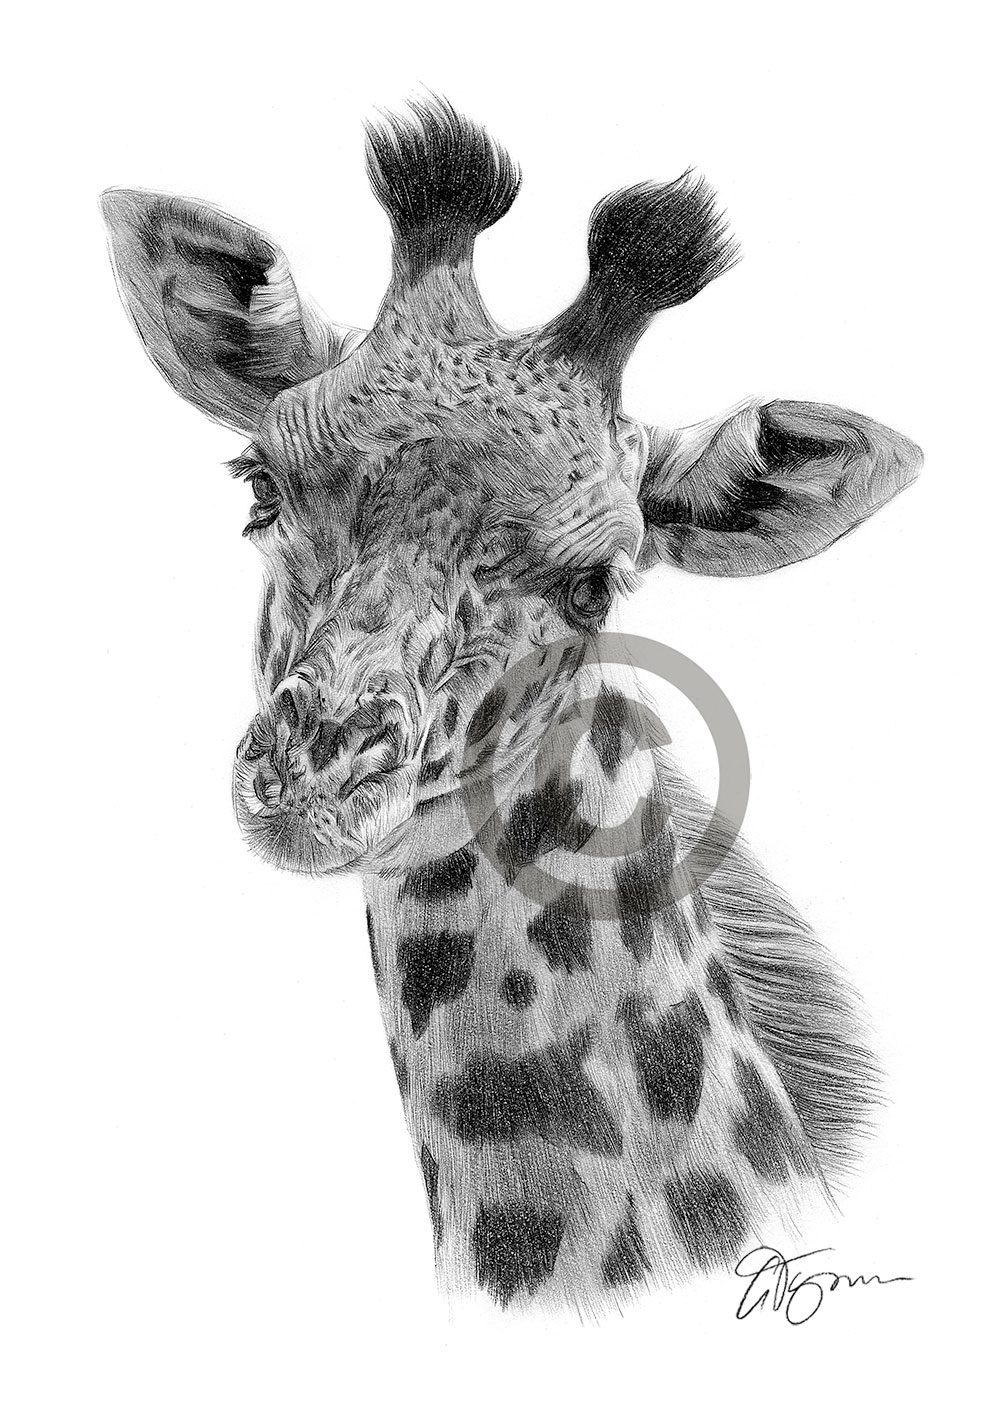 Pencil drawing of a giraffe by UK artist Gary Tymon